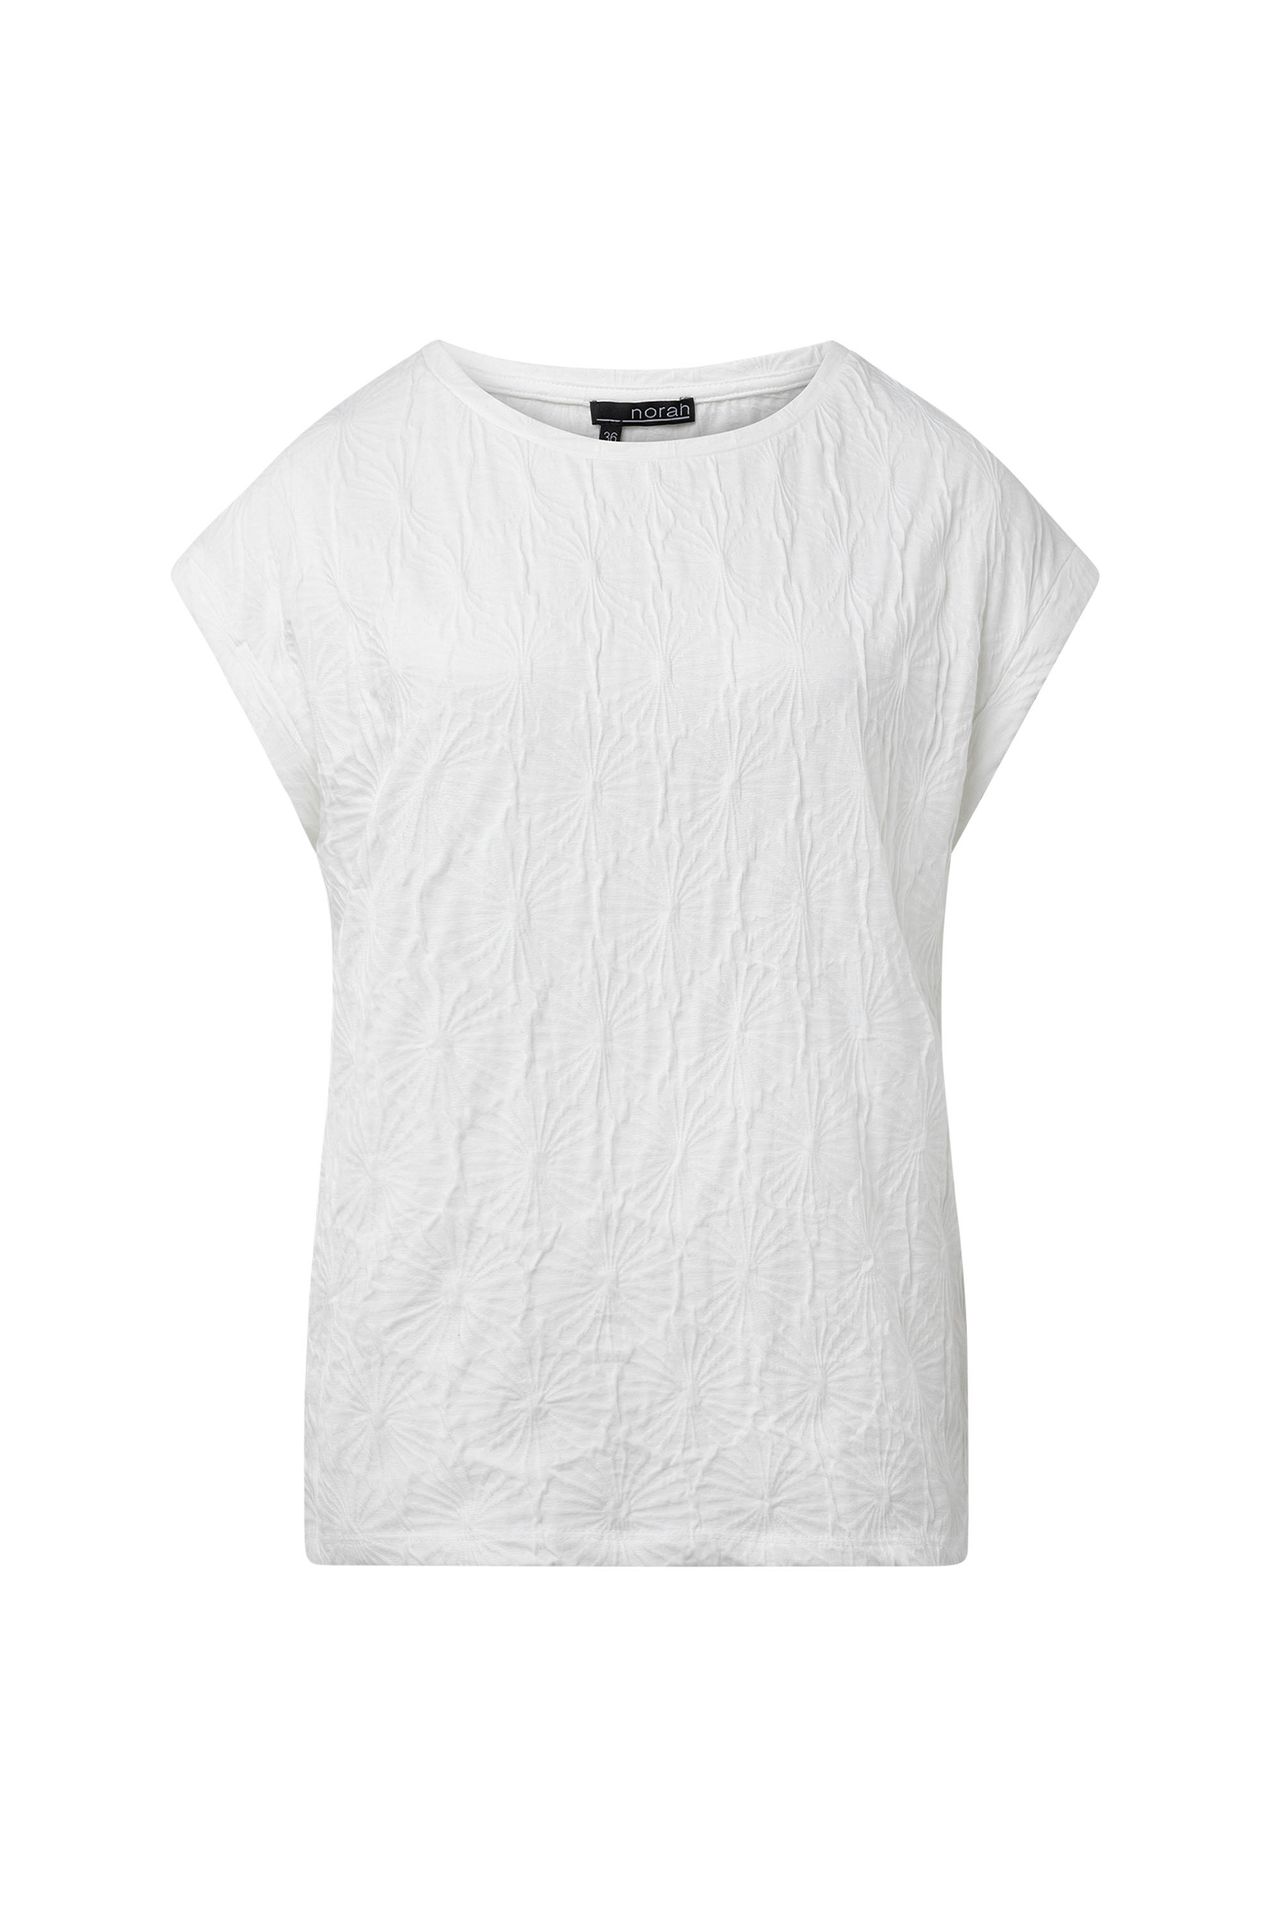 Norah Off white shirt off-white 214788-101